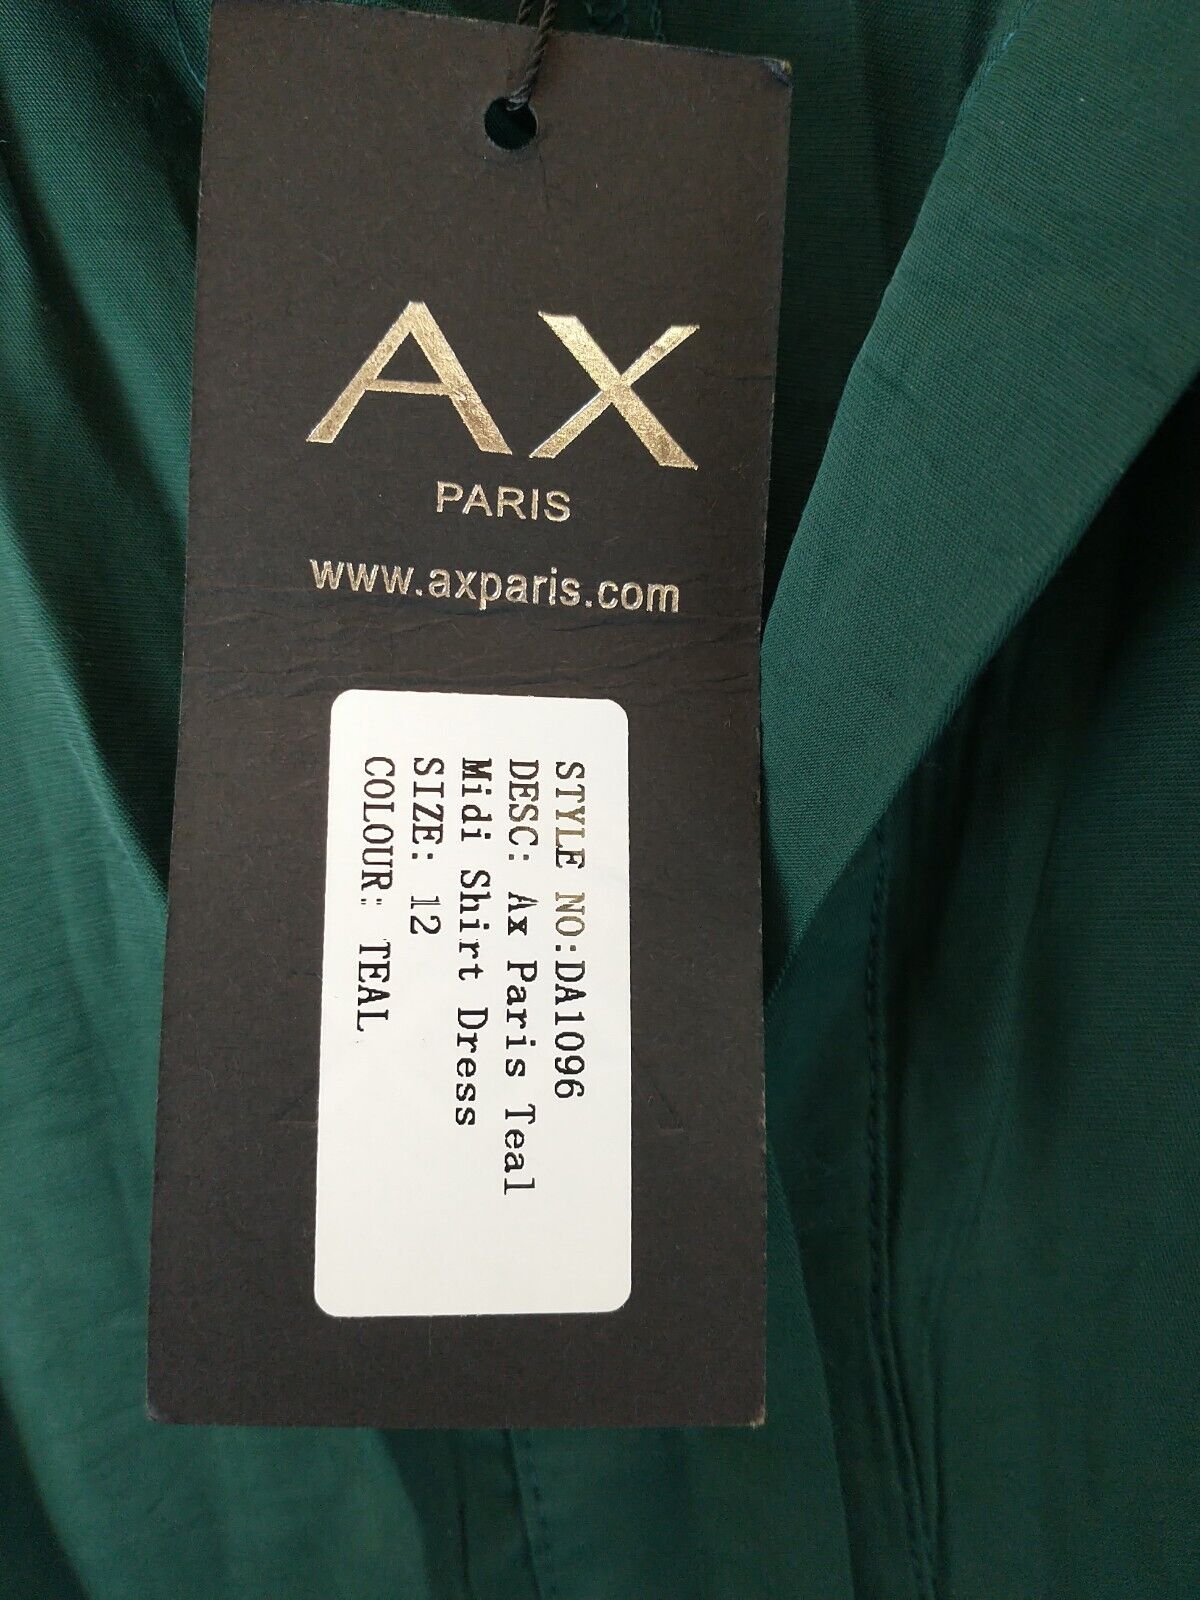 AX Paris Teal Midi Shirt Dress Size 12 ****Ref V72